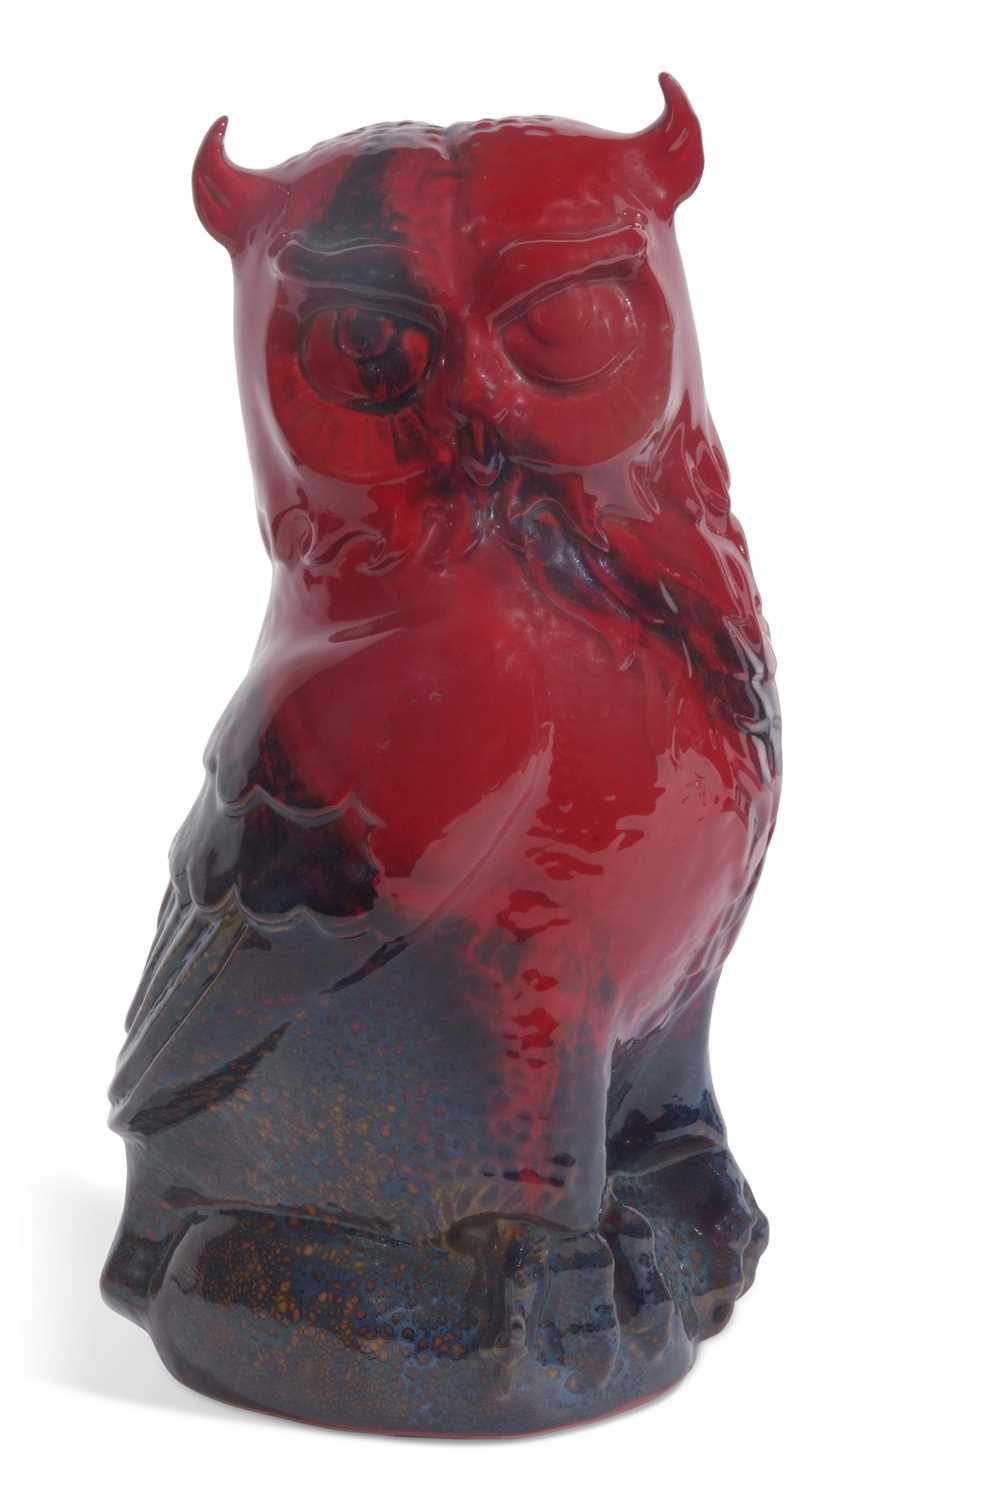 Royal Doulton Flambe model of an owl 33cm tall